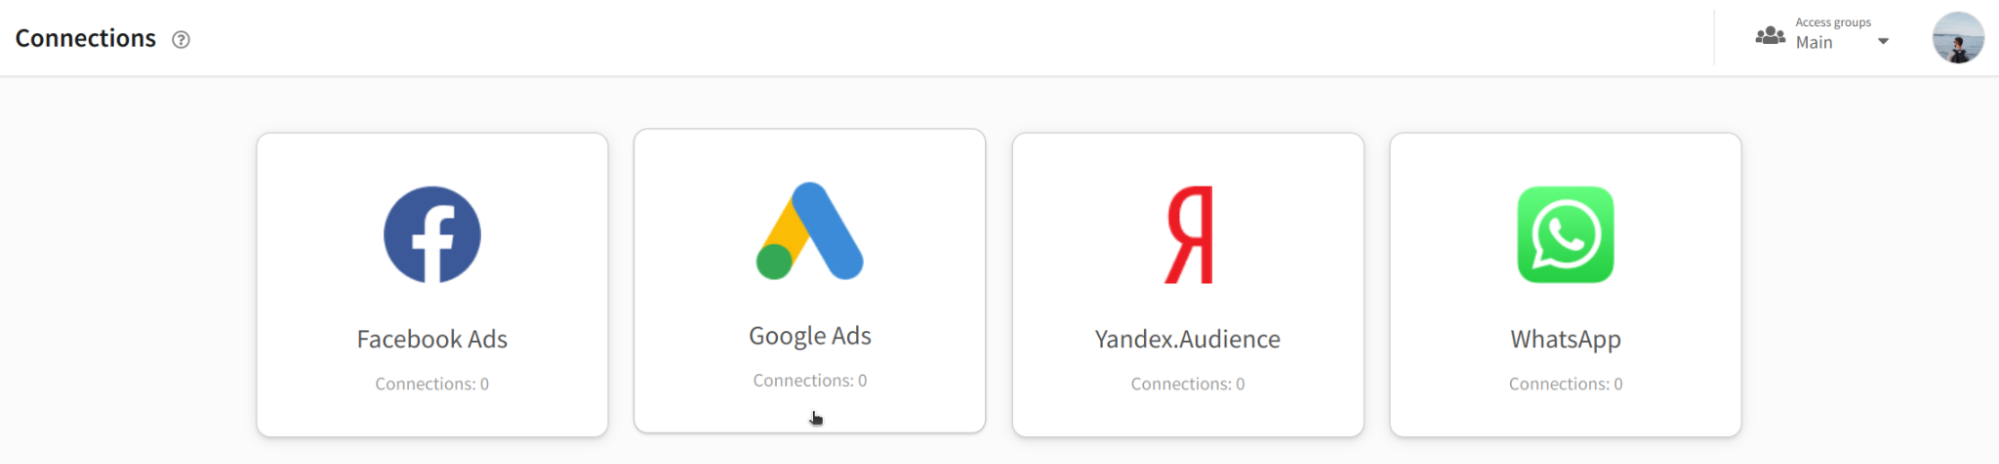 Selecting Google.Ads